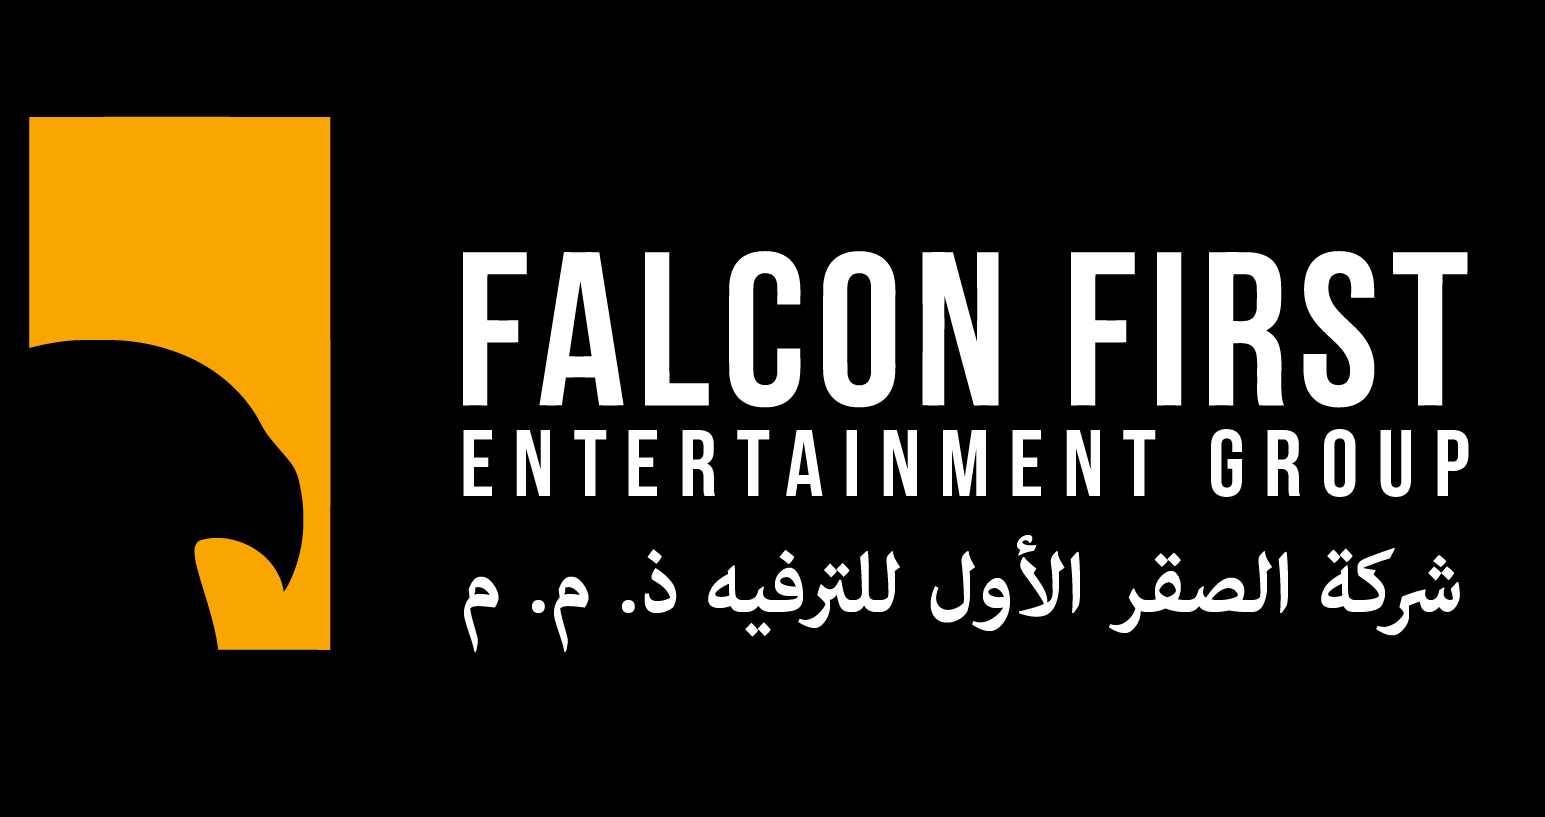 Falcon First Entertainment